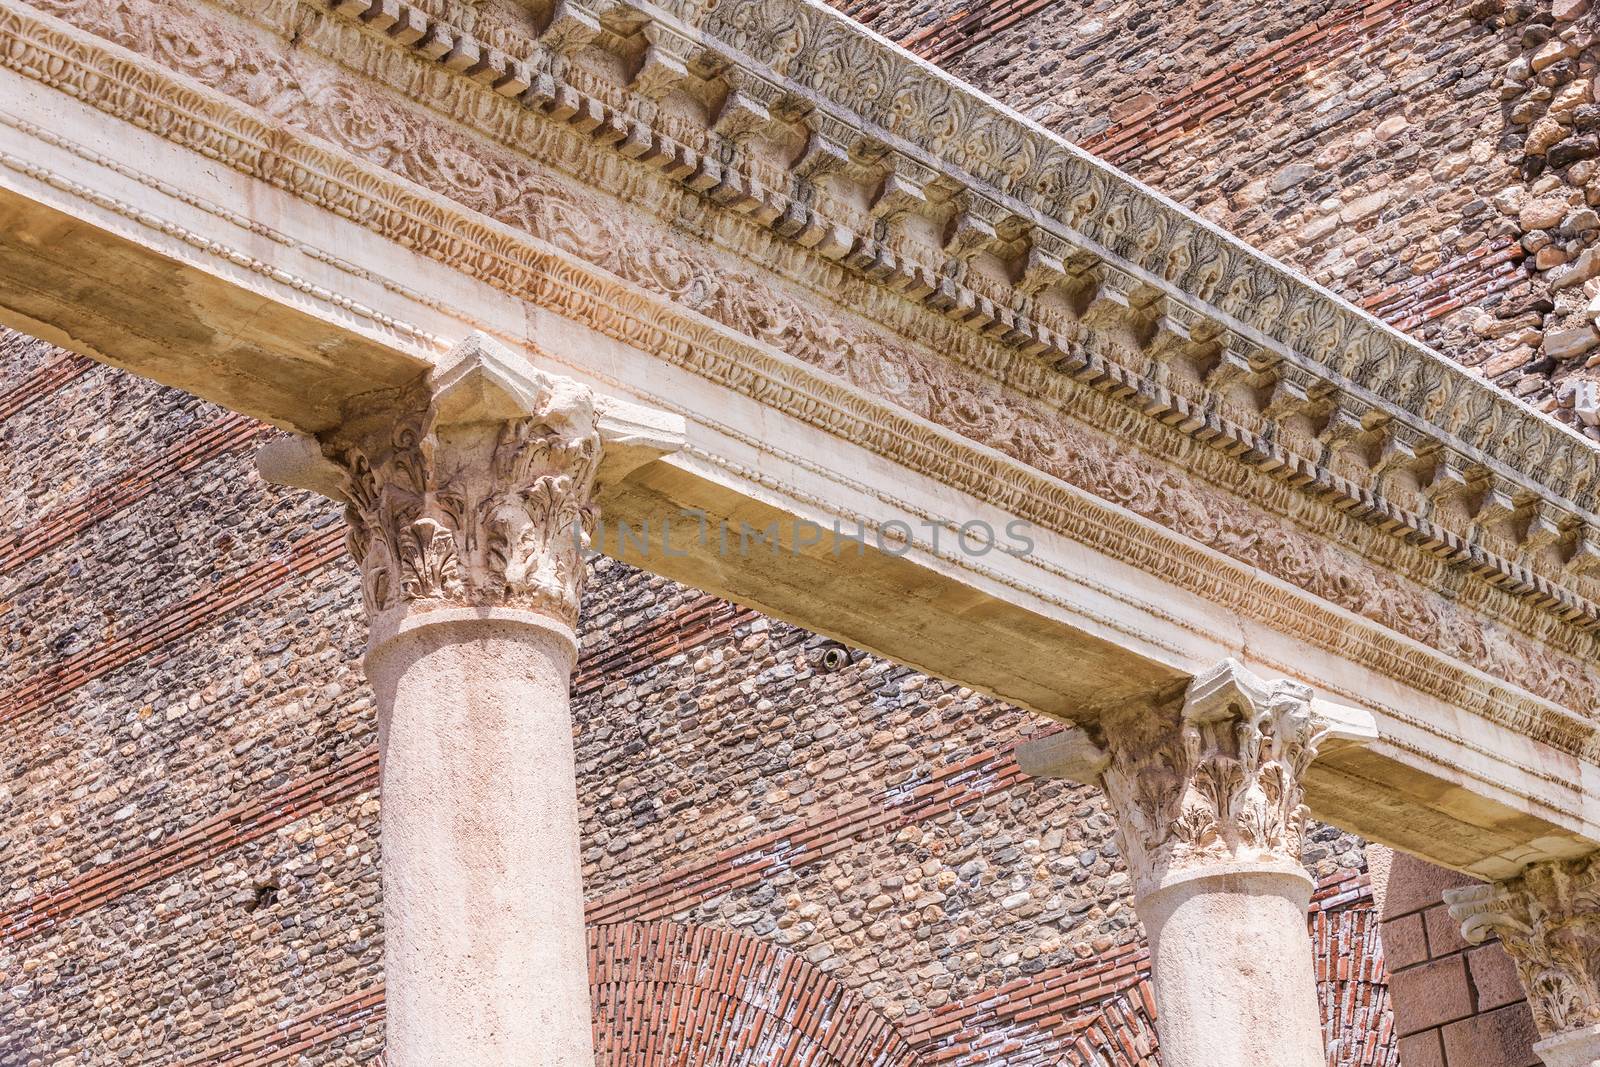 Corinthian Style Columns and Ornate Detail at Sardis Gymnasium by Creatista